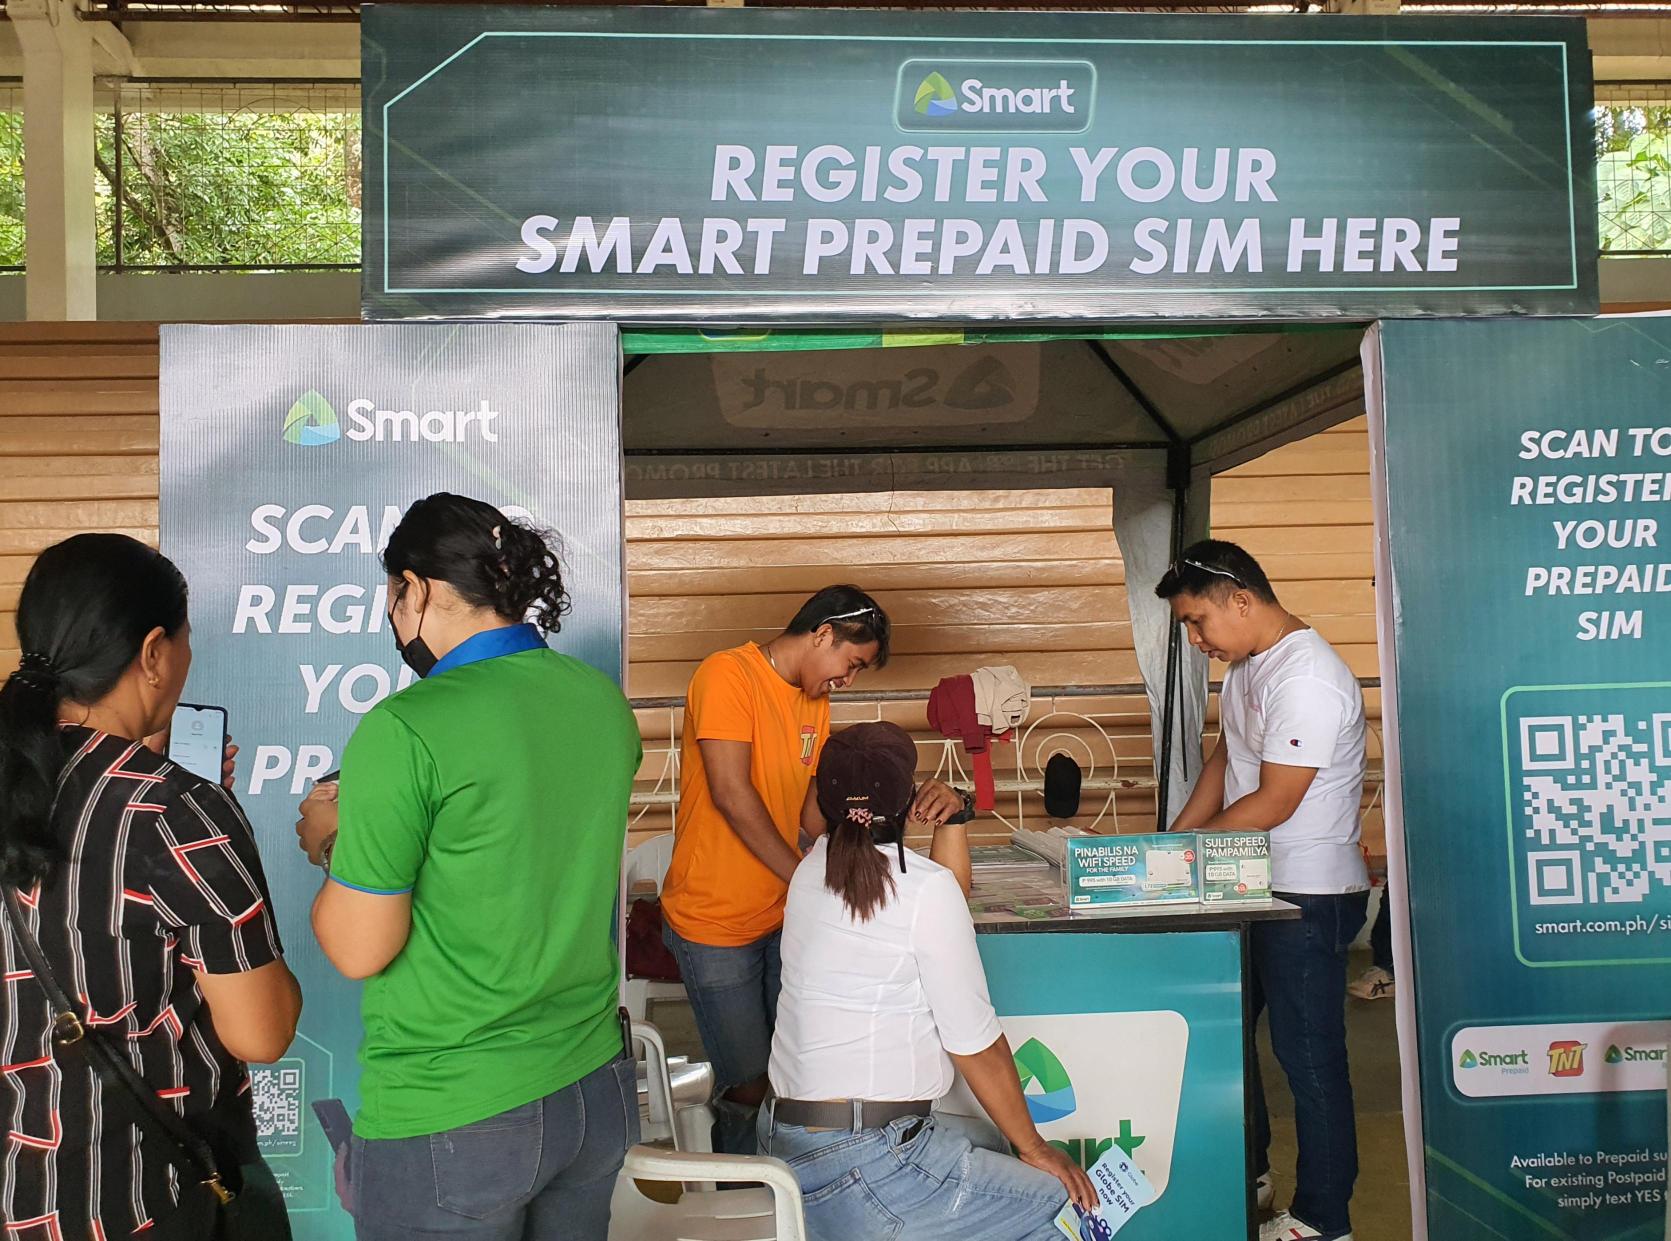 Smart, TNT lead NTC's nationwide simultaneous SIM Registration in remote areas